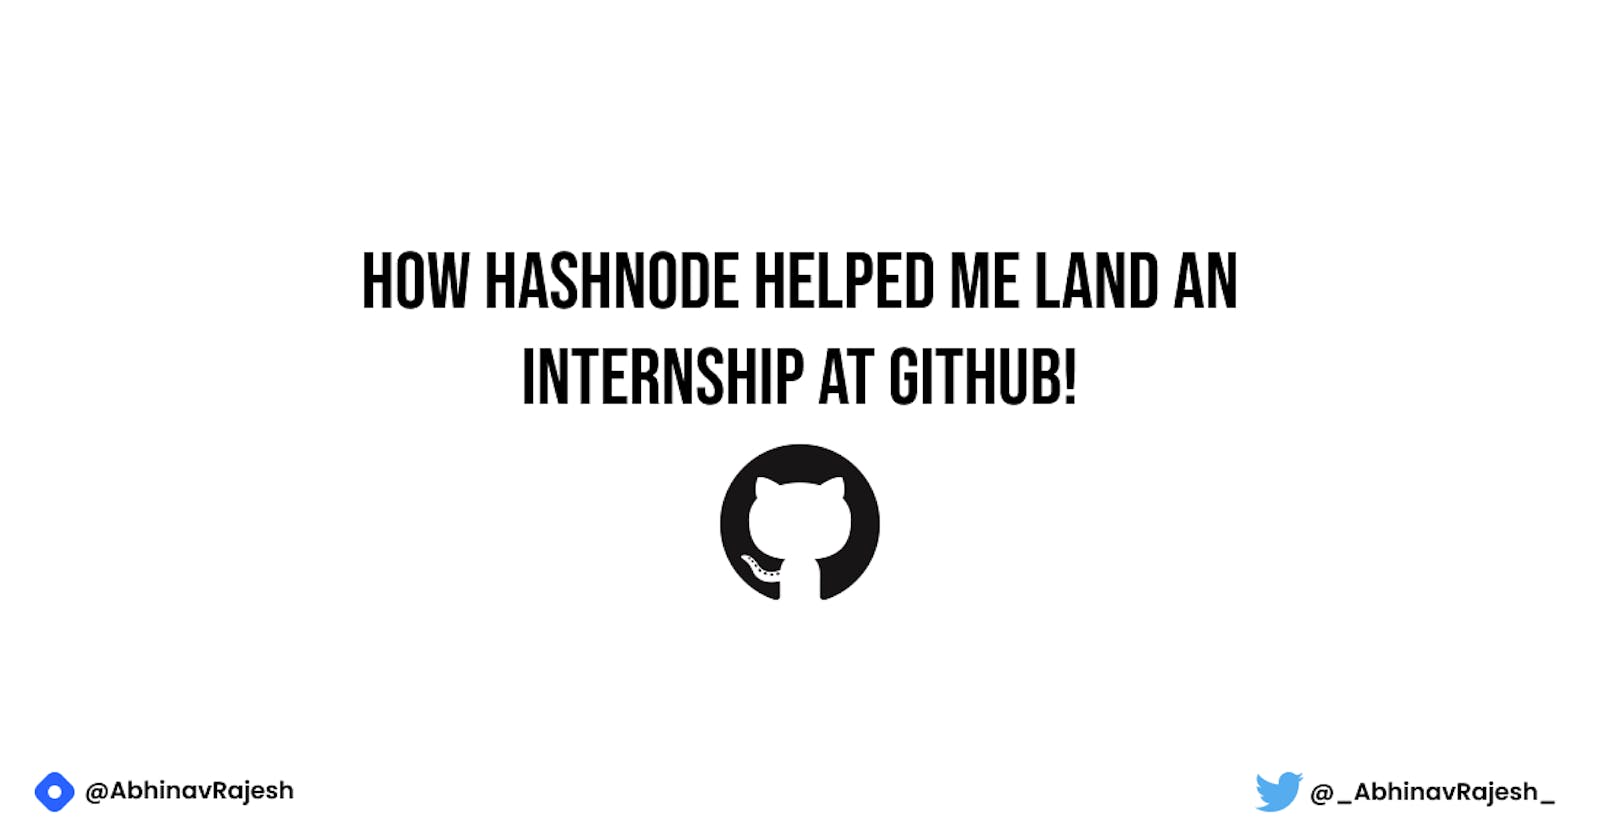 How hashnode helped me land an internship at Github!